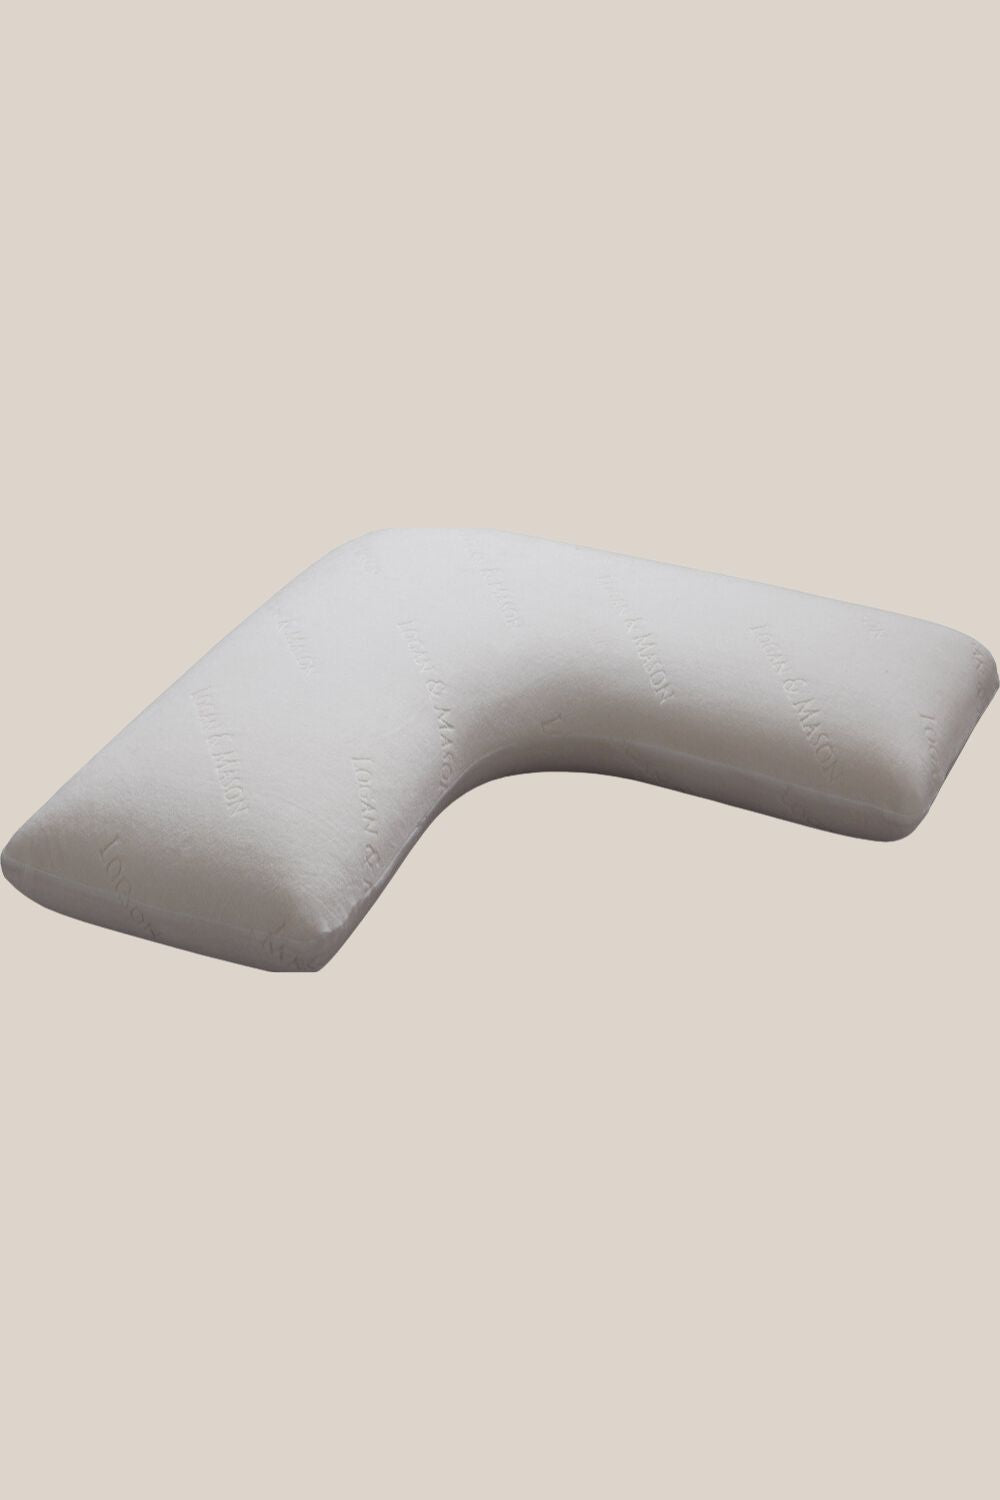 Logan & Mason V-Shaped Memory Foam Pillow